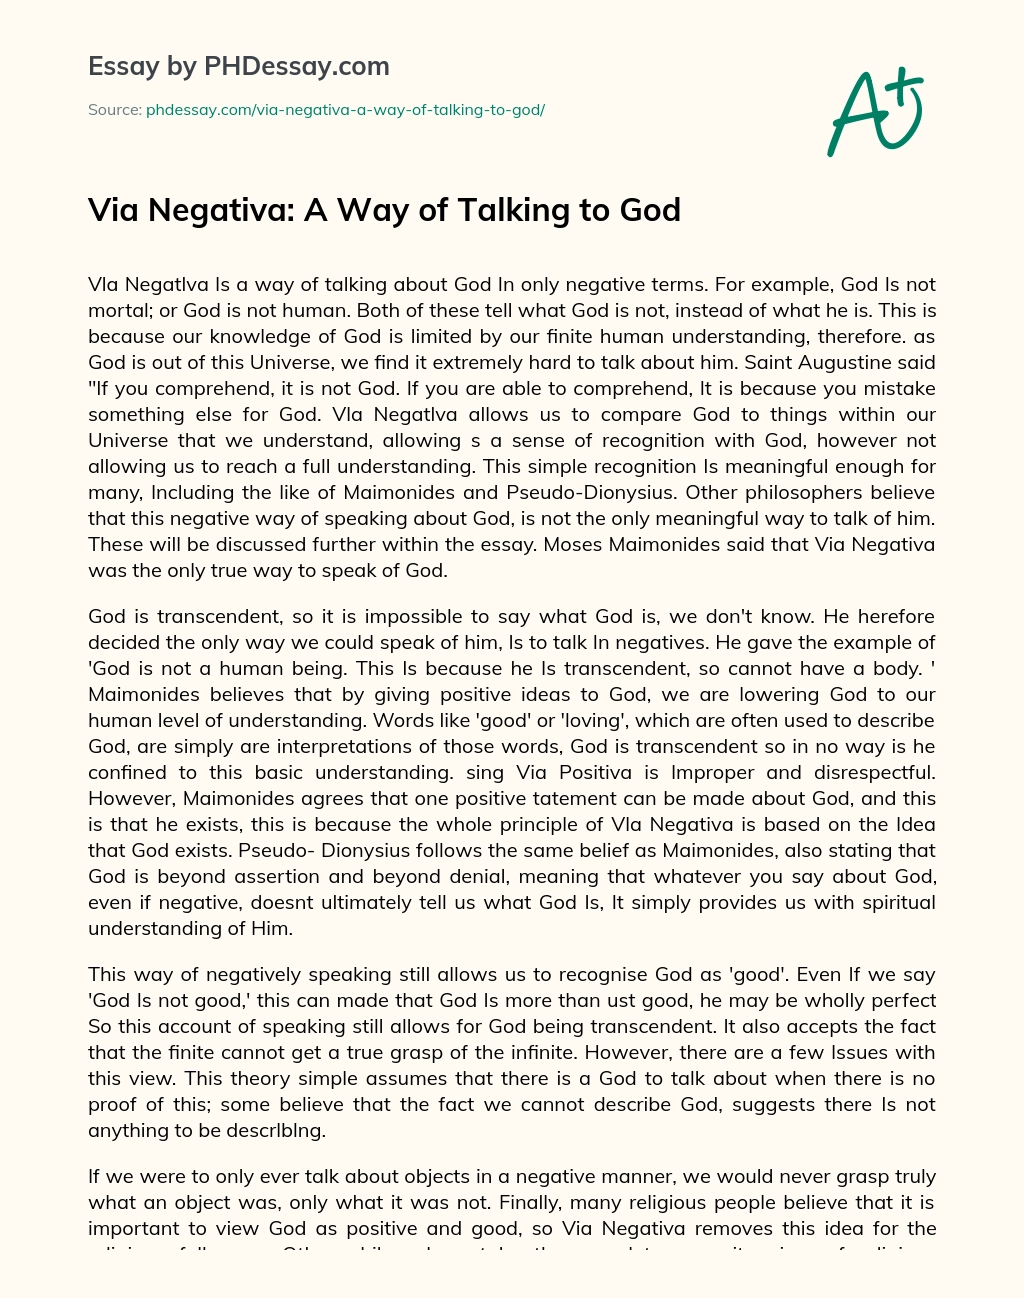 Via Negativa: A Way of Talking to God essay